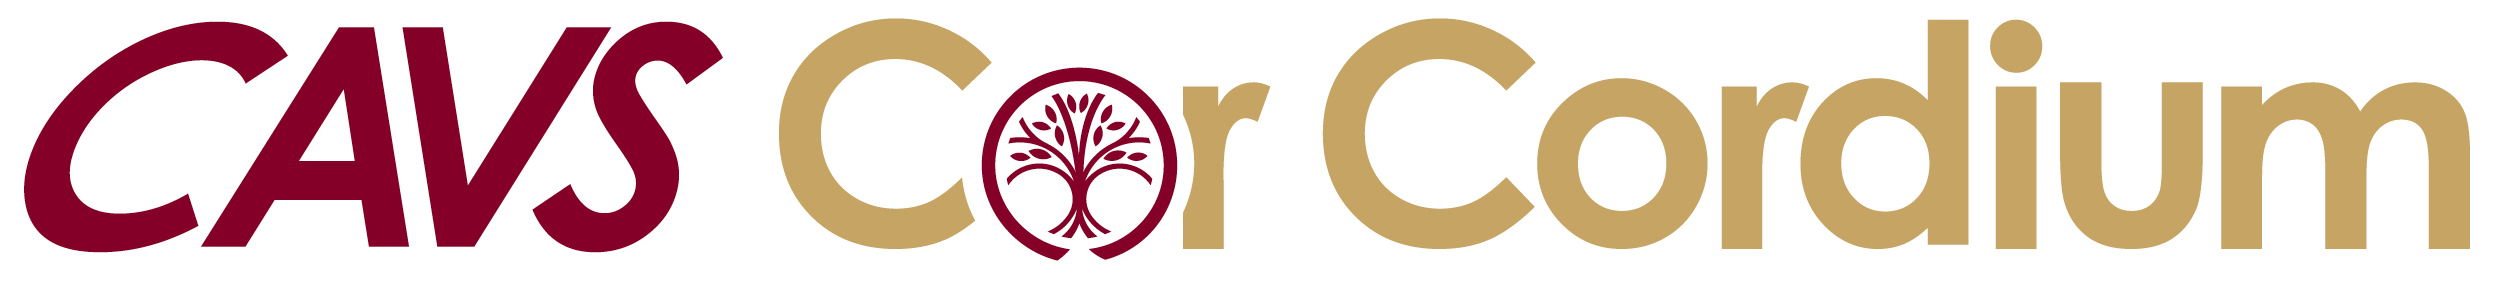 Cavs Cor Cordium logo